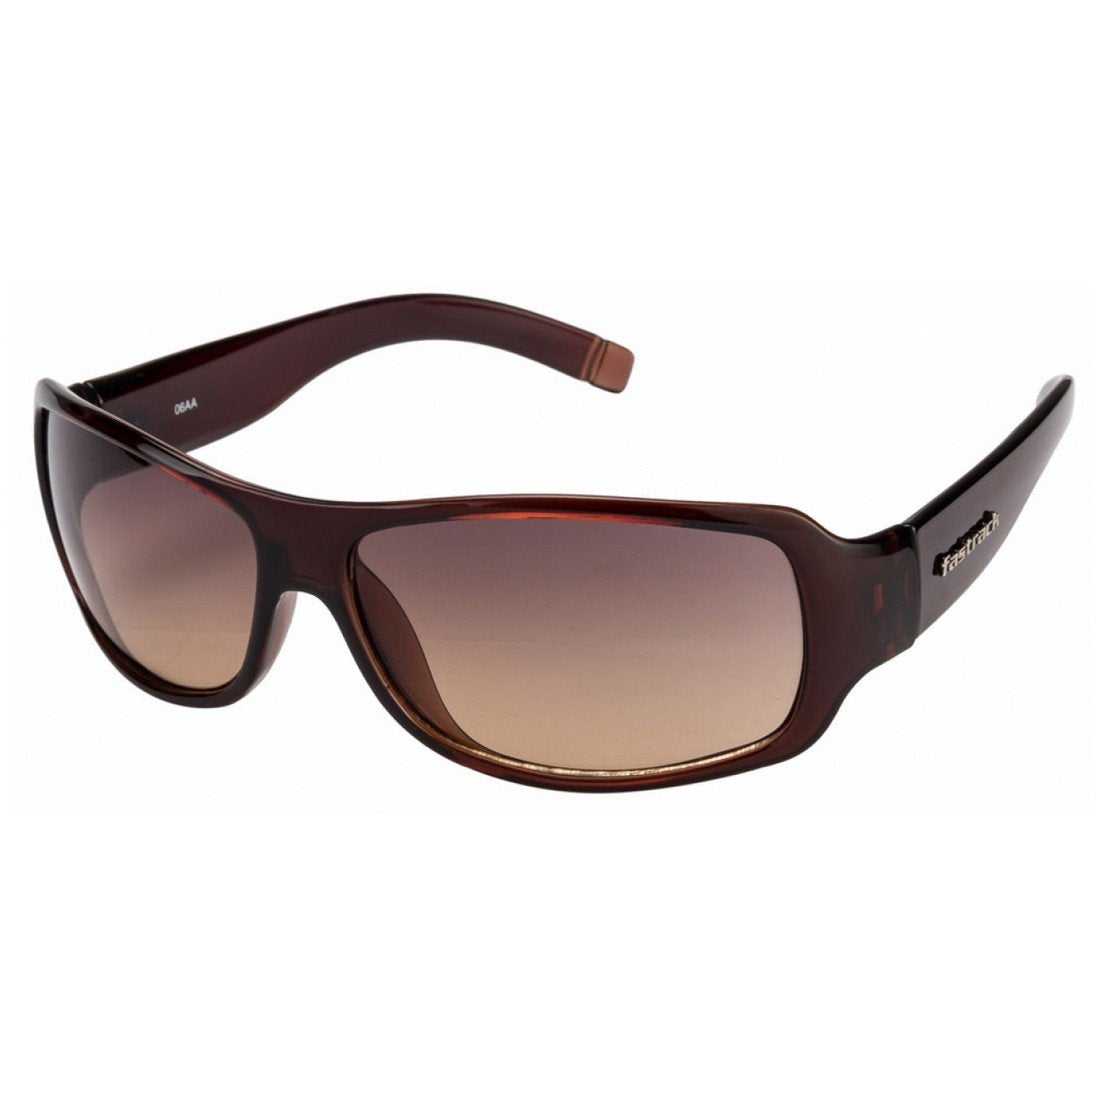 Wraparound Rimmed Sunglasses Fastrack - P190GR2 at best price | Titan Eye+